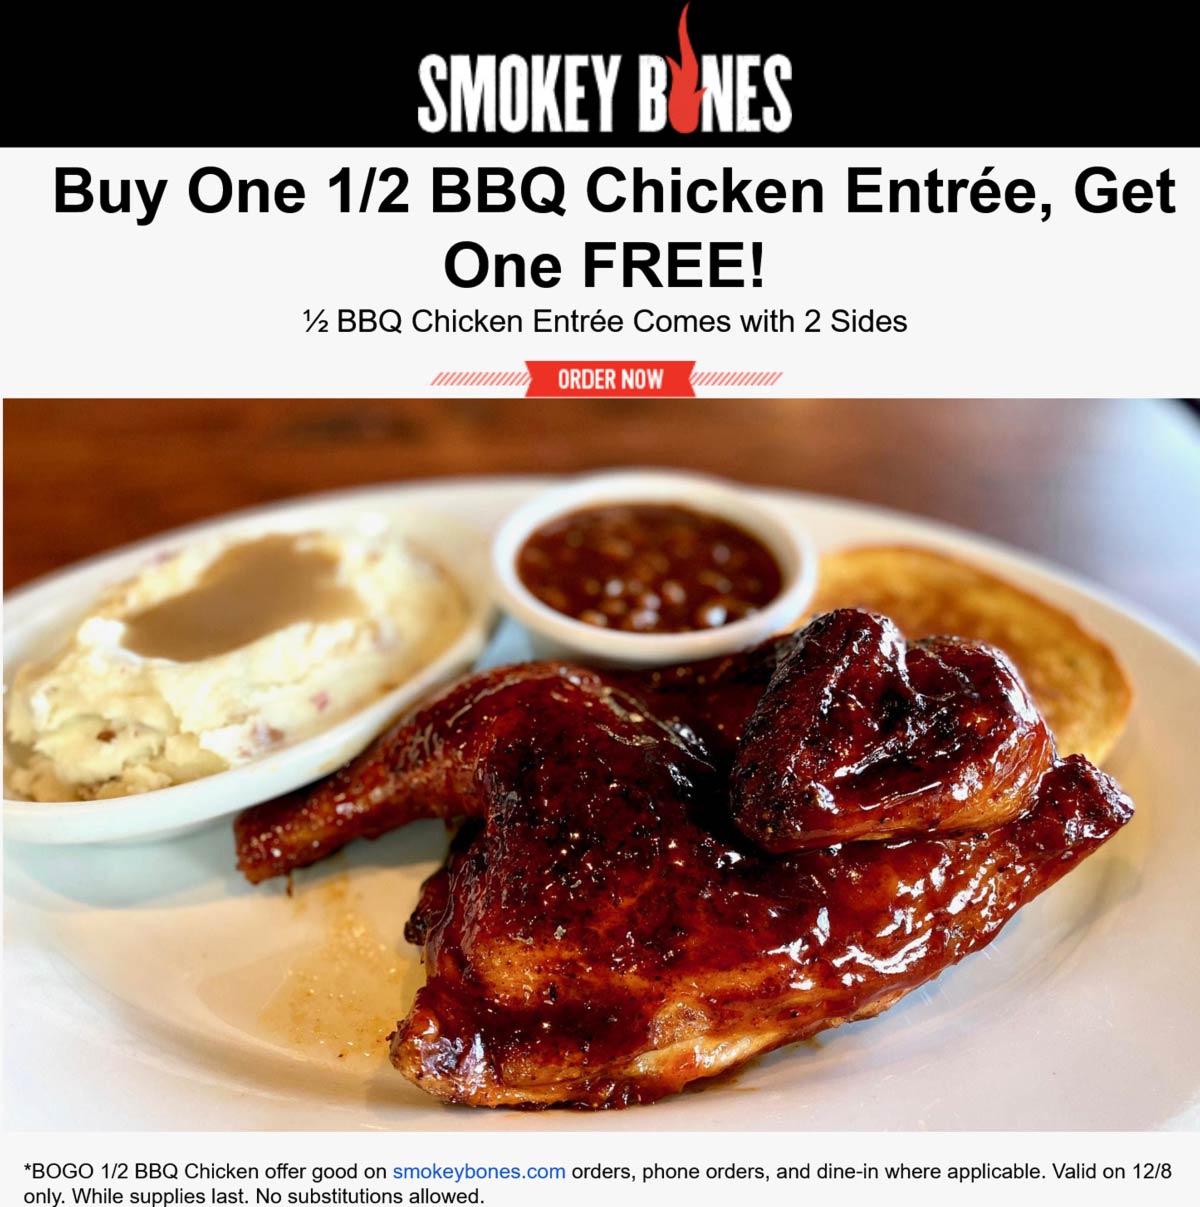 Smokey Bones restaurants Coupon  Second BBQ half chicken meal free today at Smokey Bones #smokeybones 